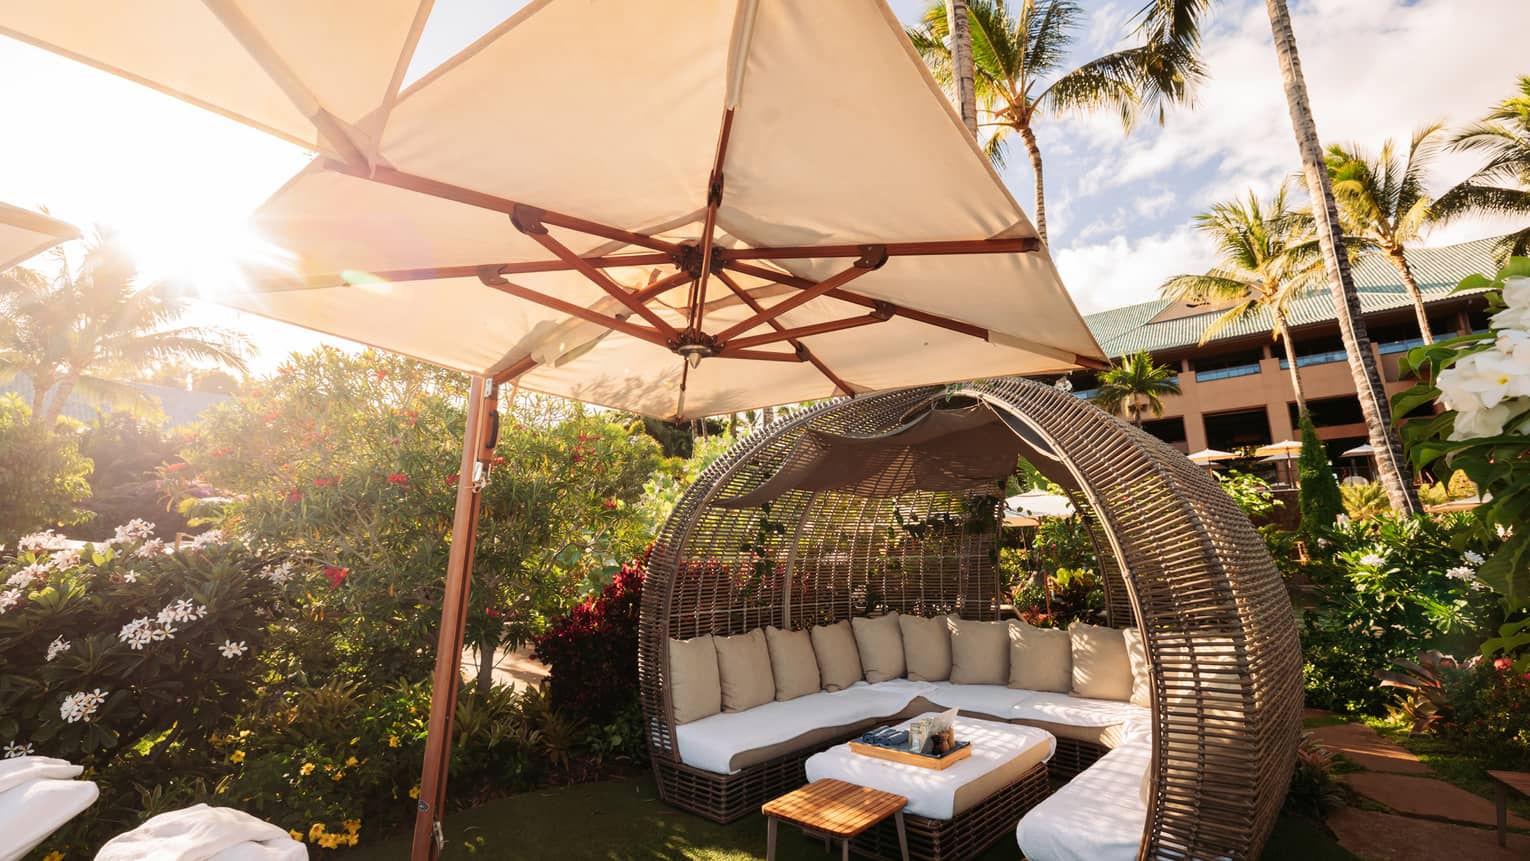 Private sanctuary cabana at Hawaiian resort